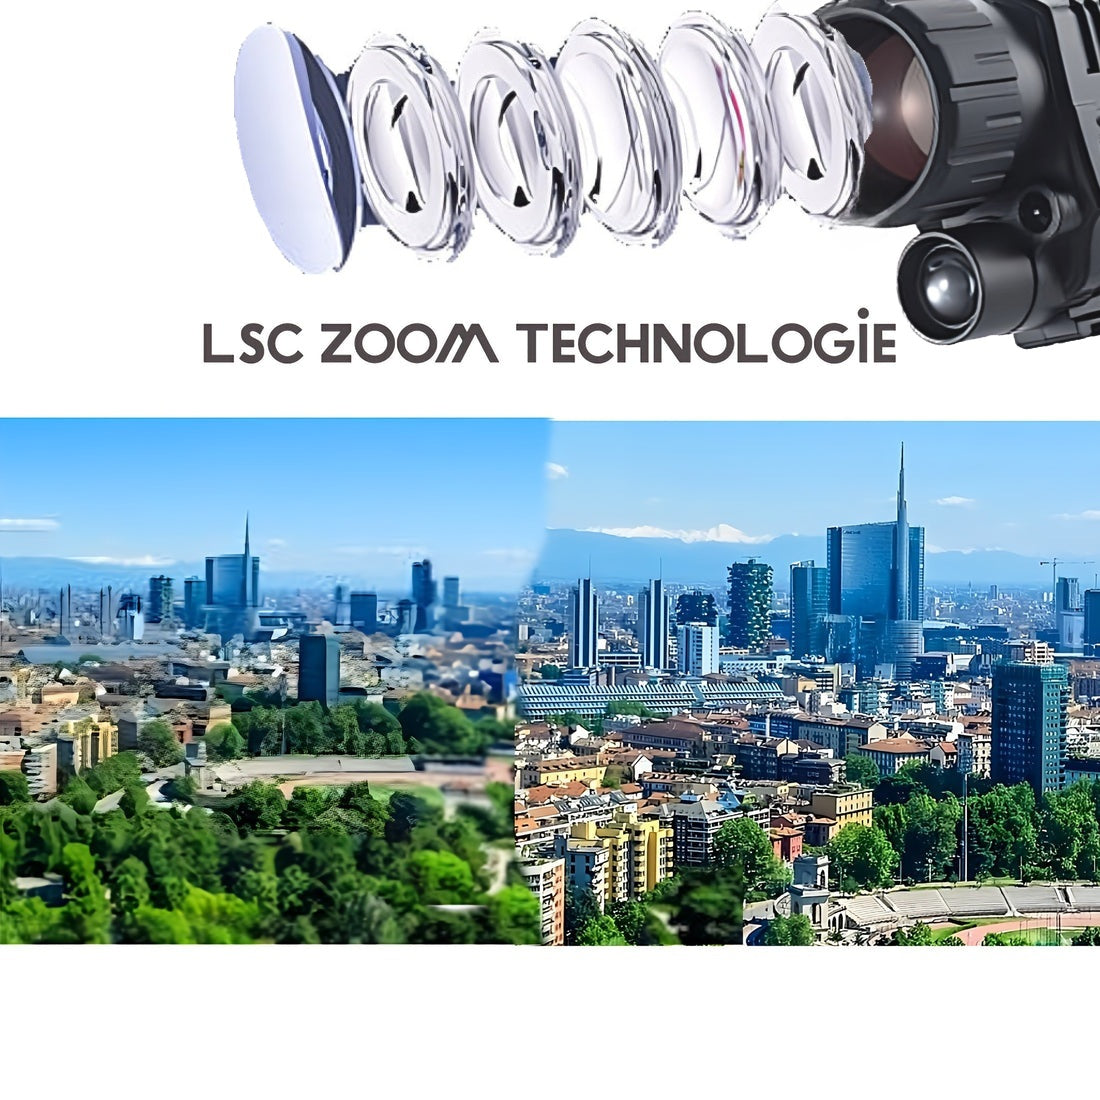 Monokulares Nachtsichtgerät Fernglas 4-Fach-Digitale Vergrößerung Full-HD Teleskop Zoom Infrarot IR Sensor 850nm IP44 geprüft integrierter Akku USB Schnittstelle